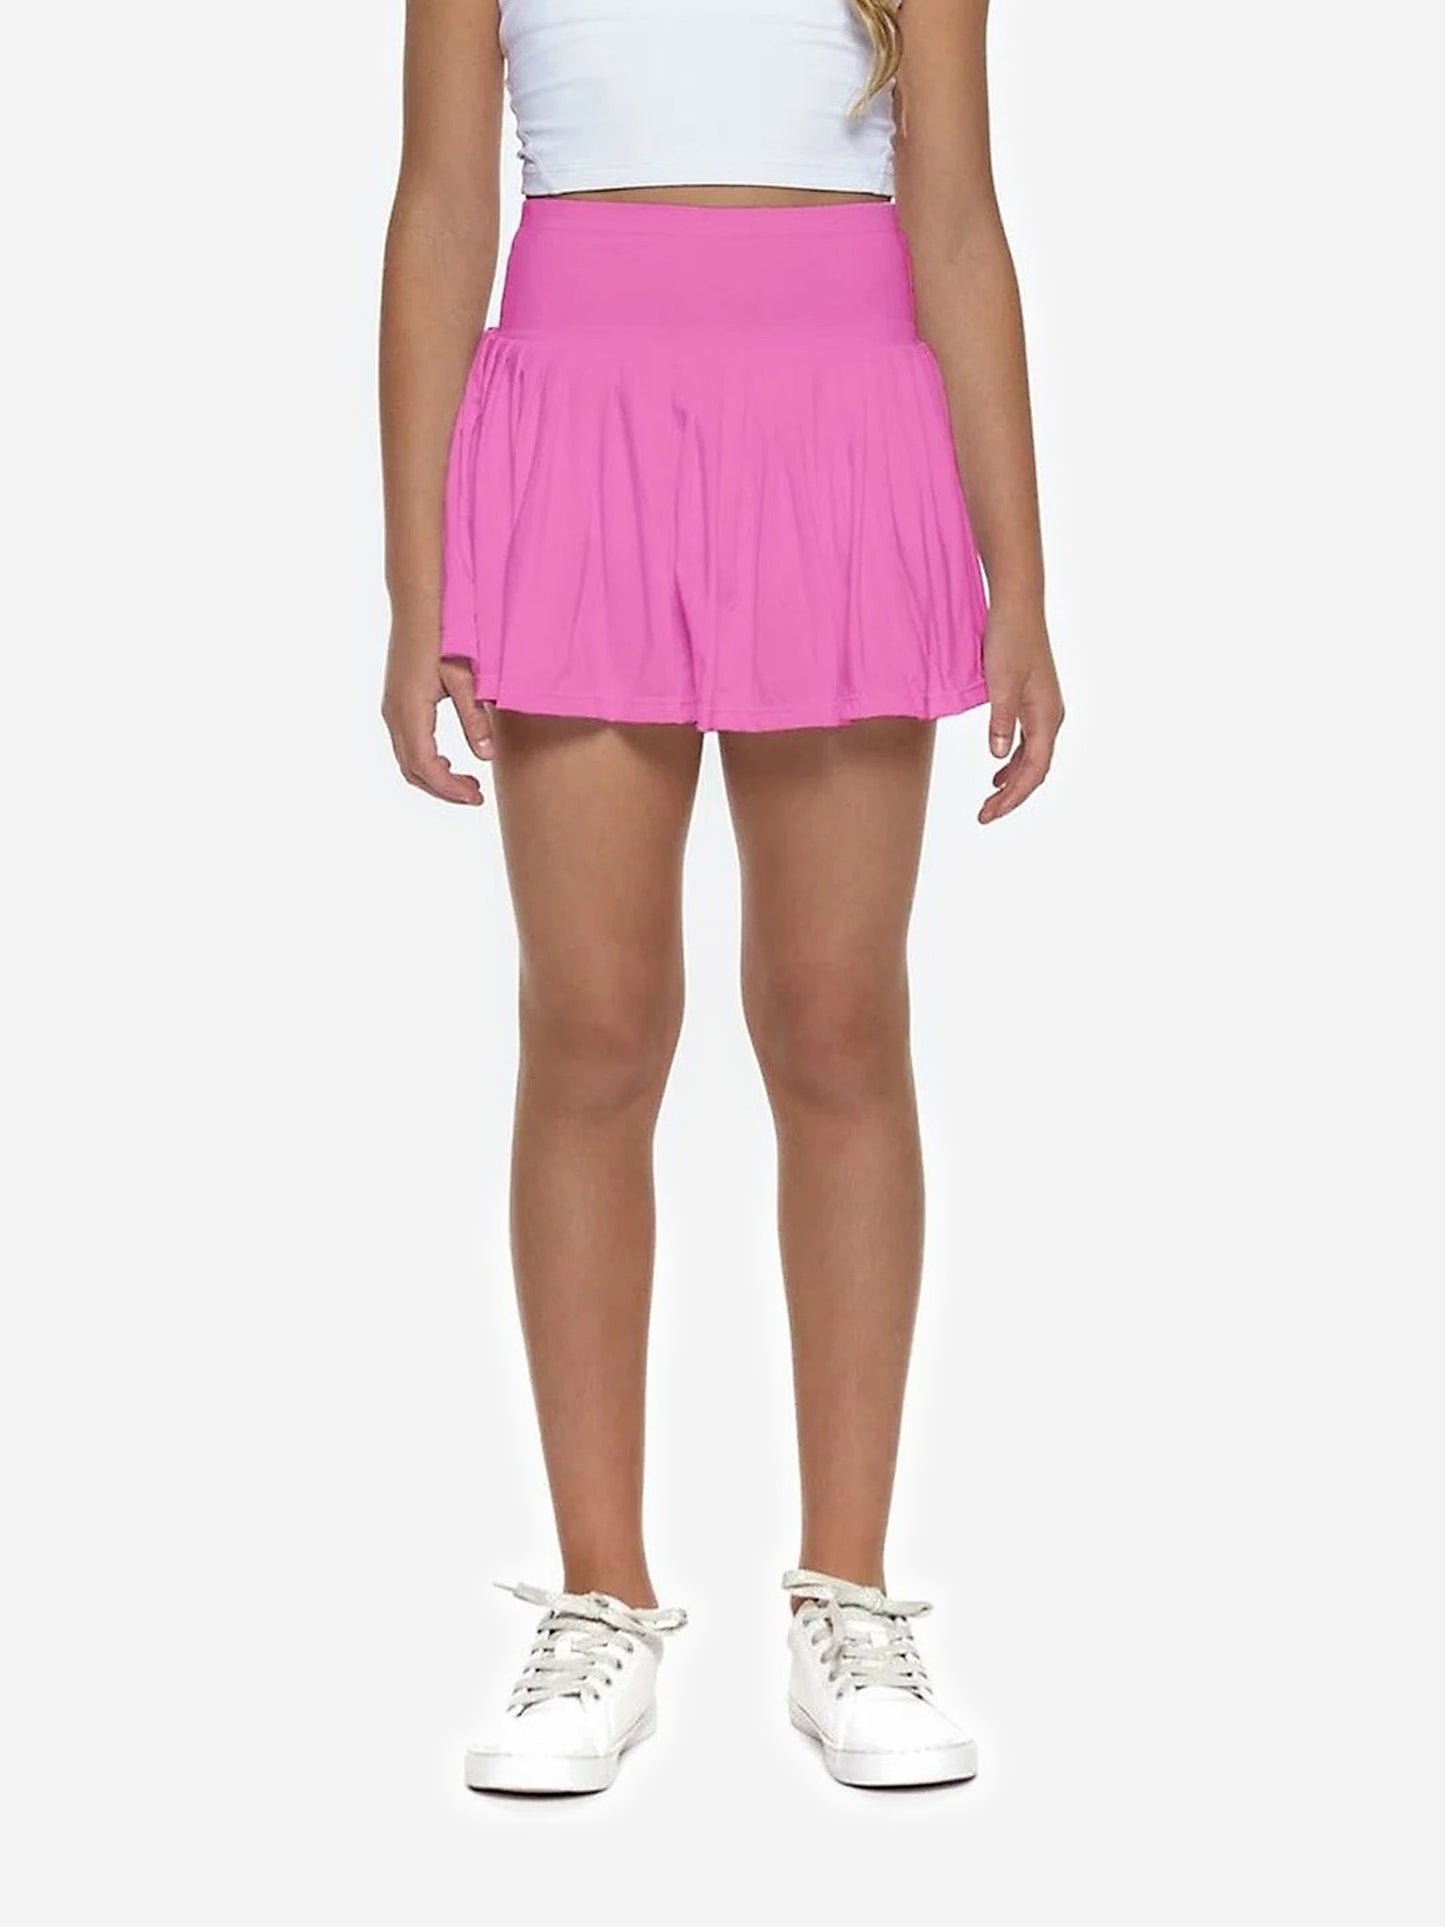 Peixoto Girls' Lily Tennis Skirt